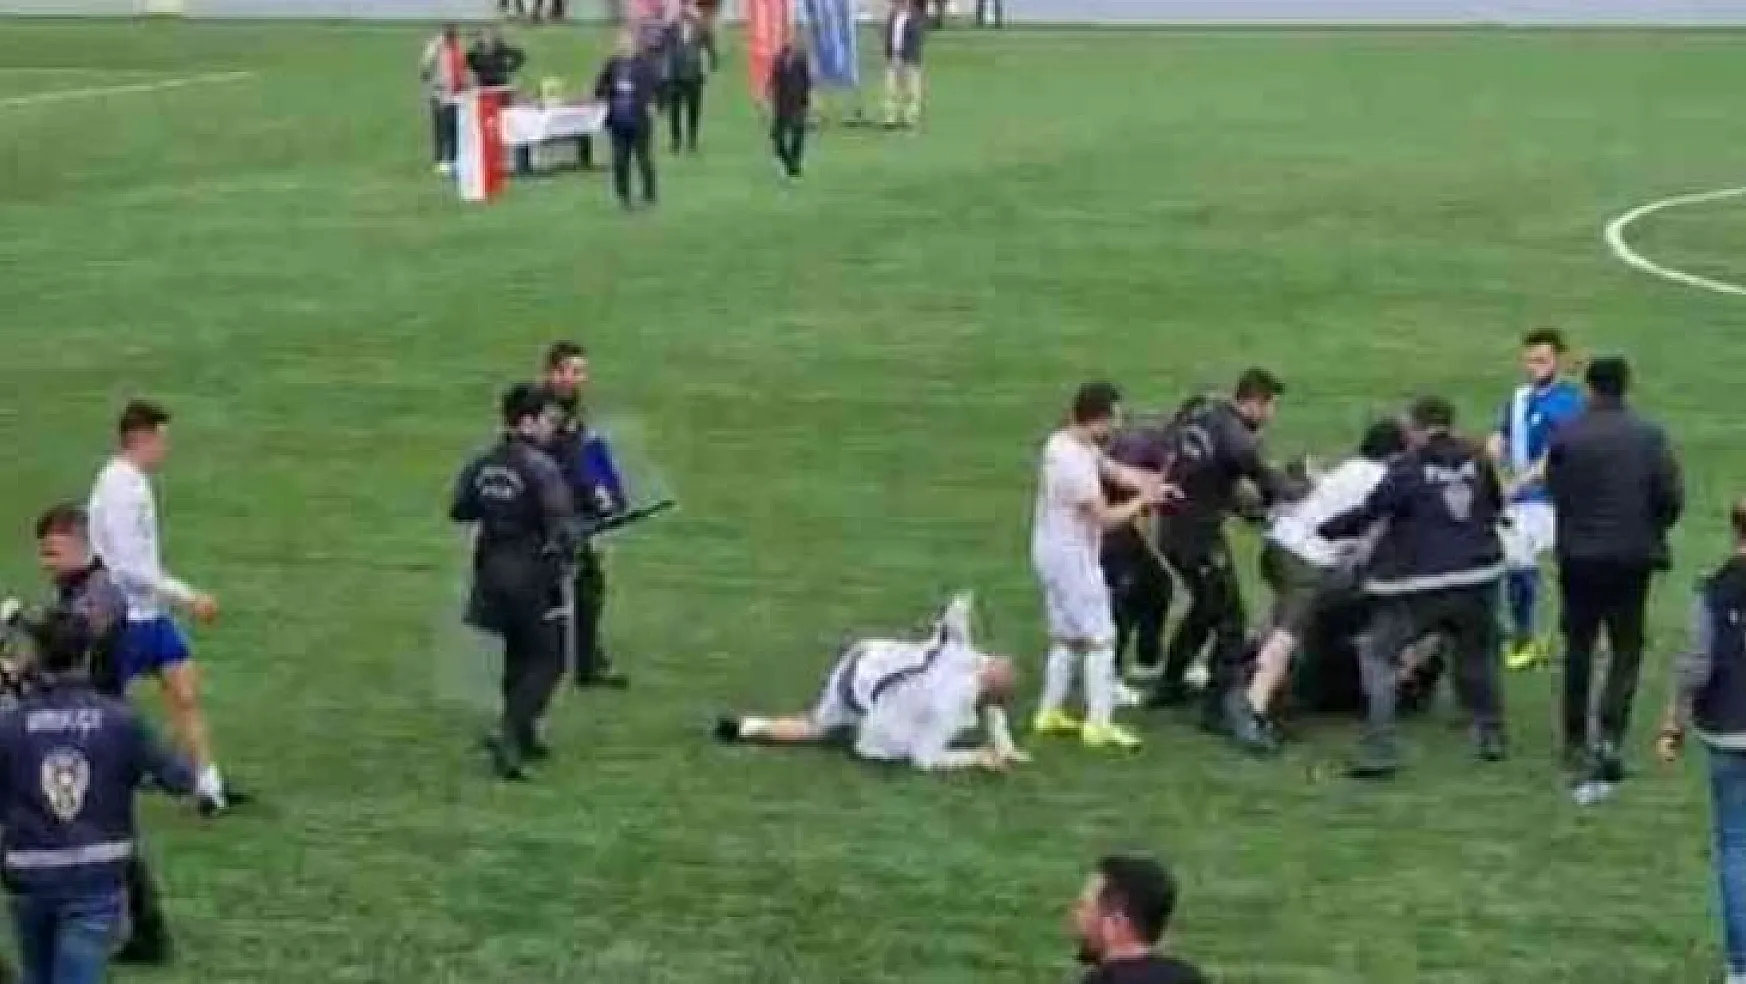 Marmaris'te futbol turnuvasının finaline kavga damga vurdu